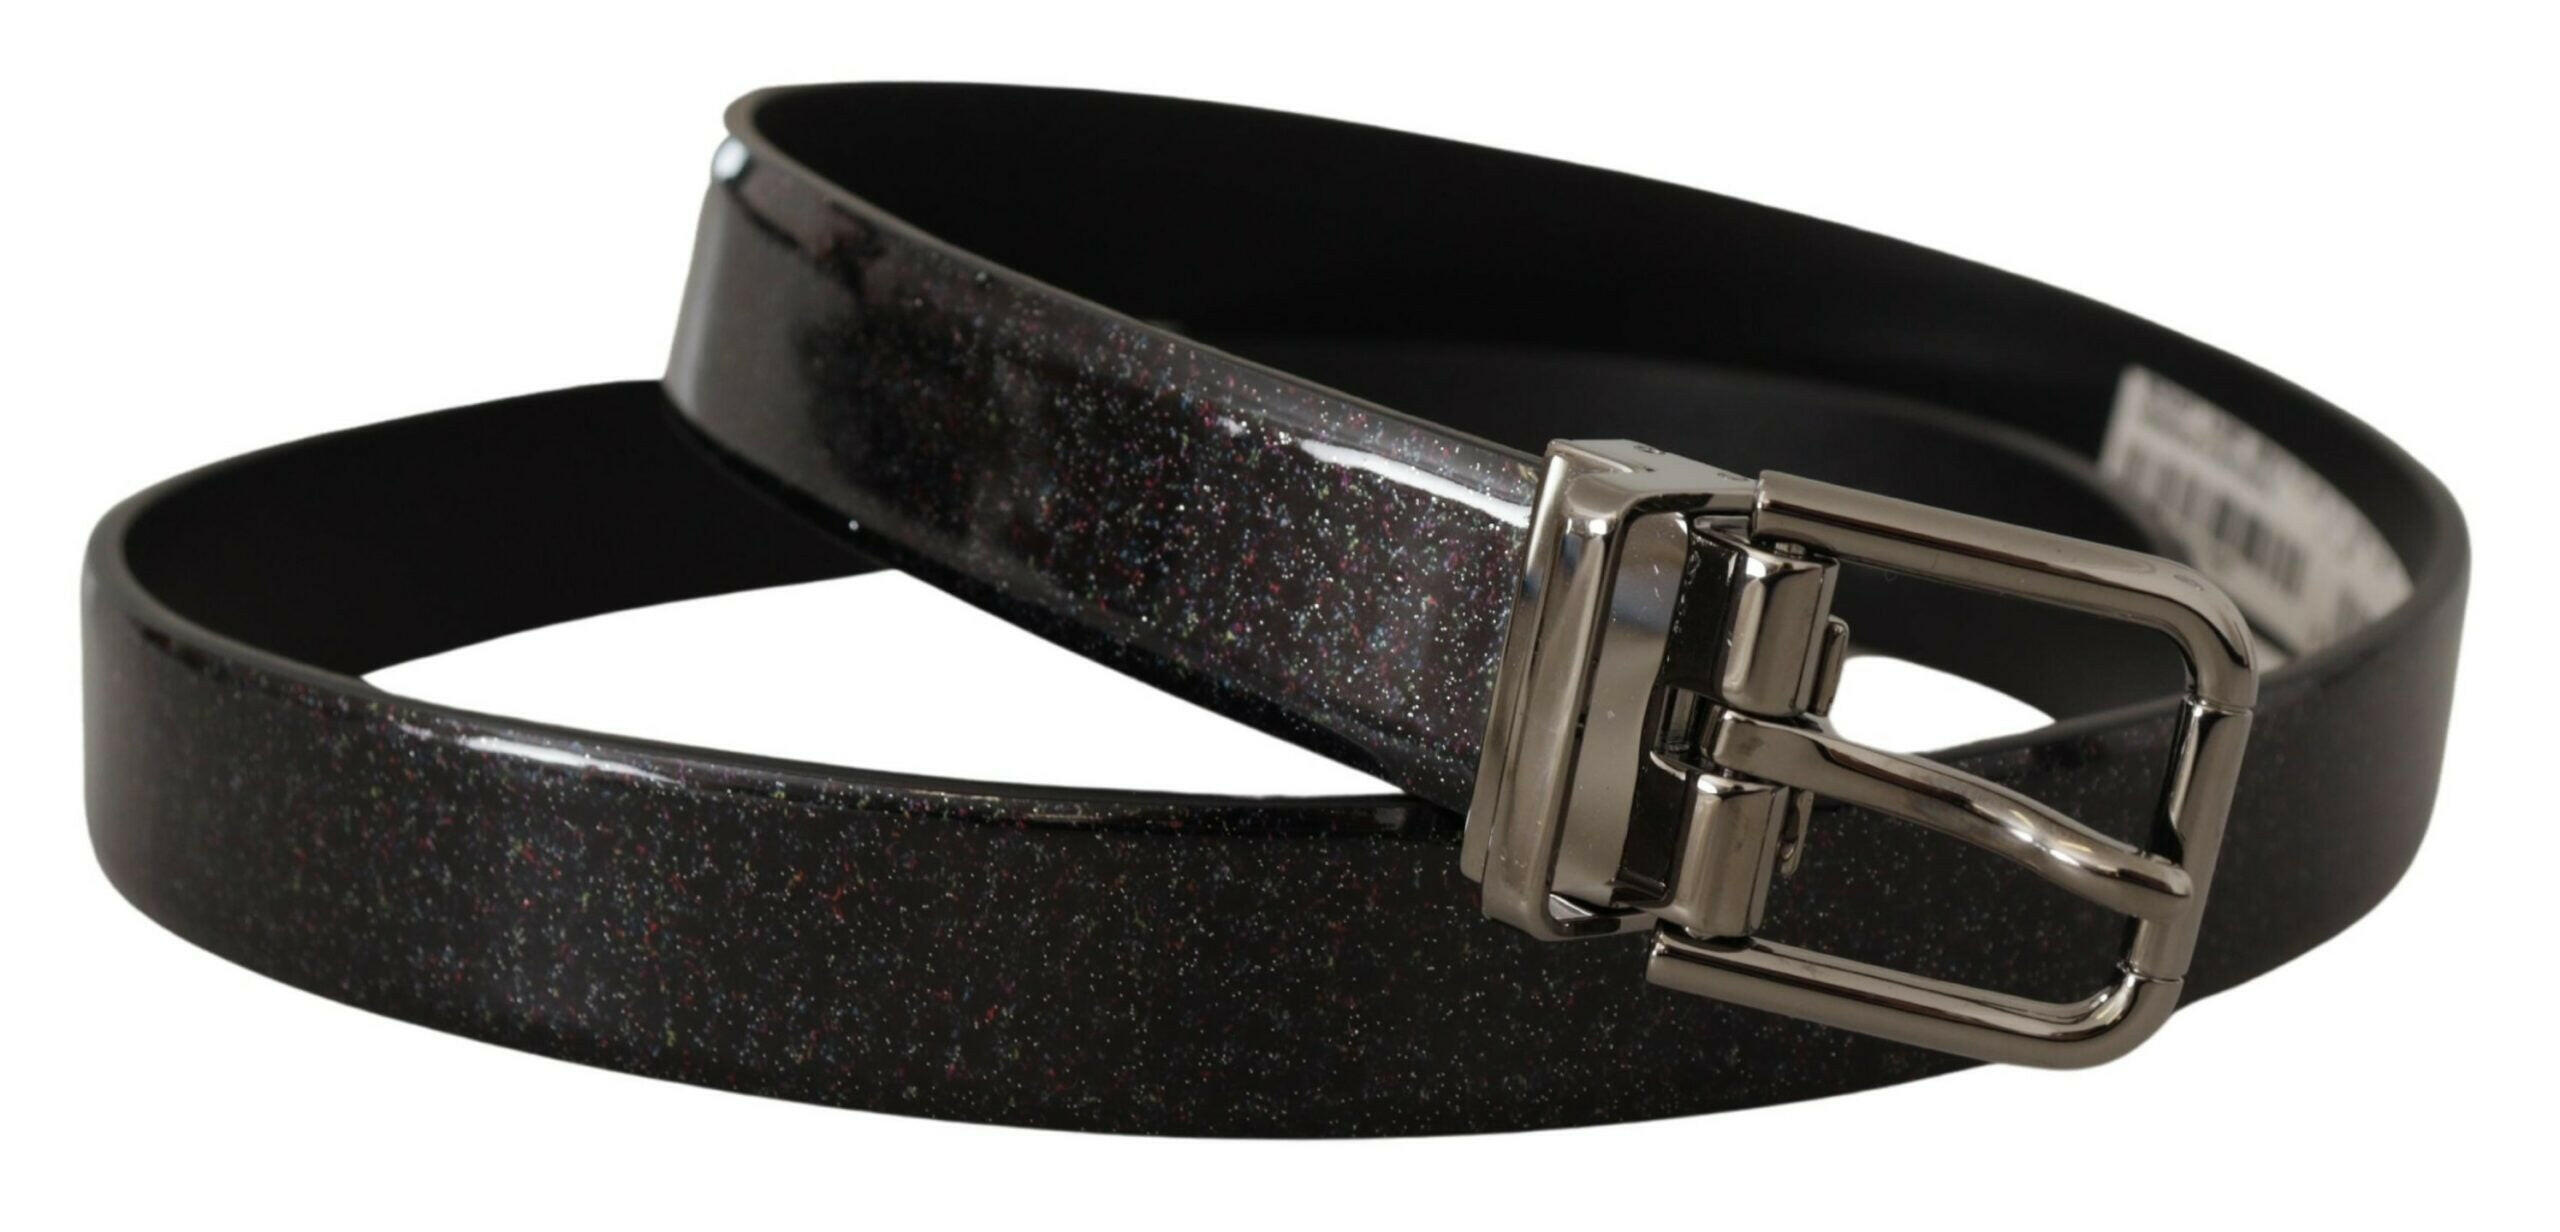 Dolce & Gabbana Black Vernice Puntinata Leather Silver Tone Metal Belt - GENUINE AUTHENTIC BRAND LLC  